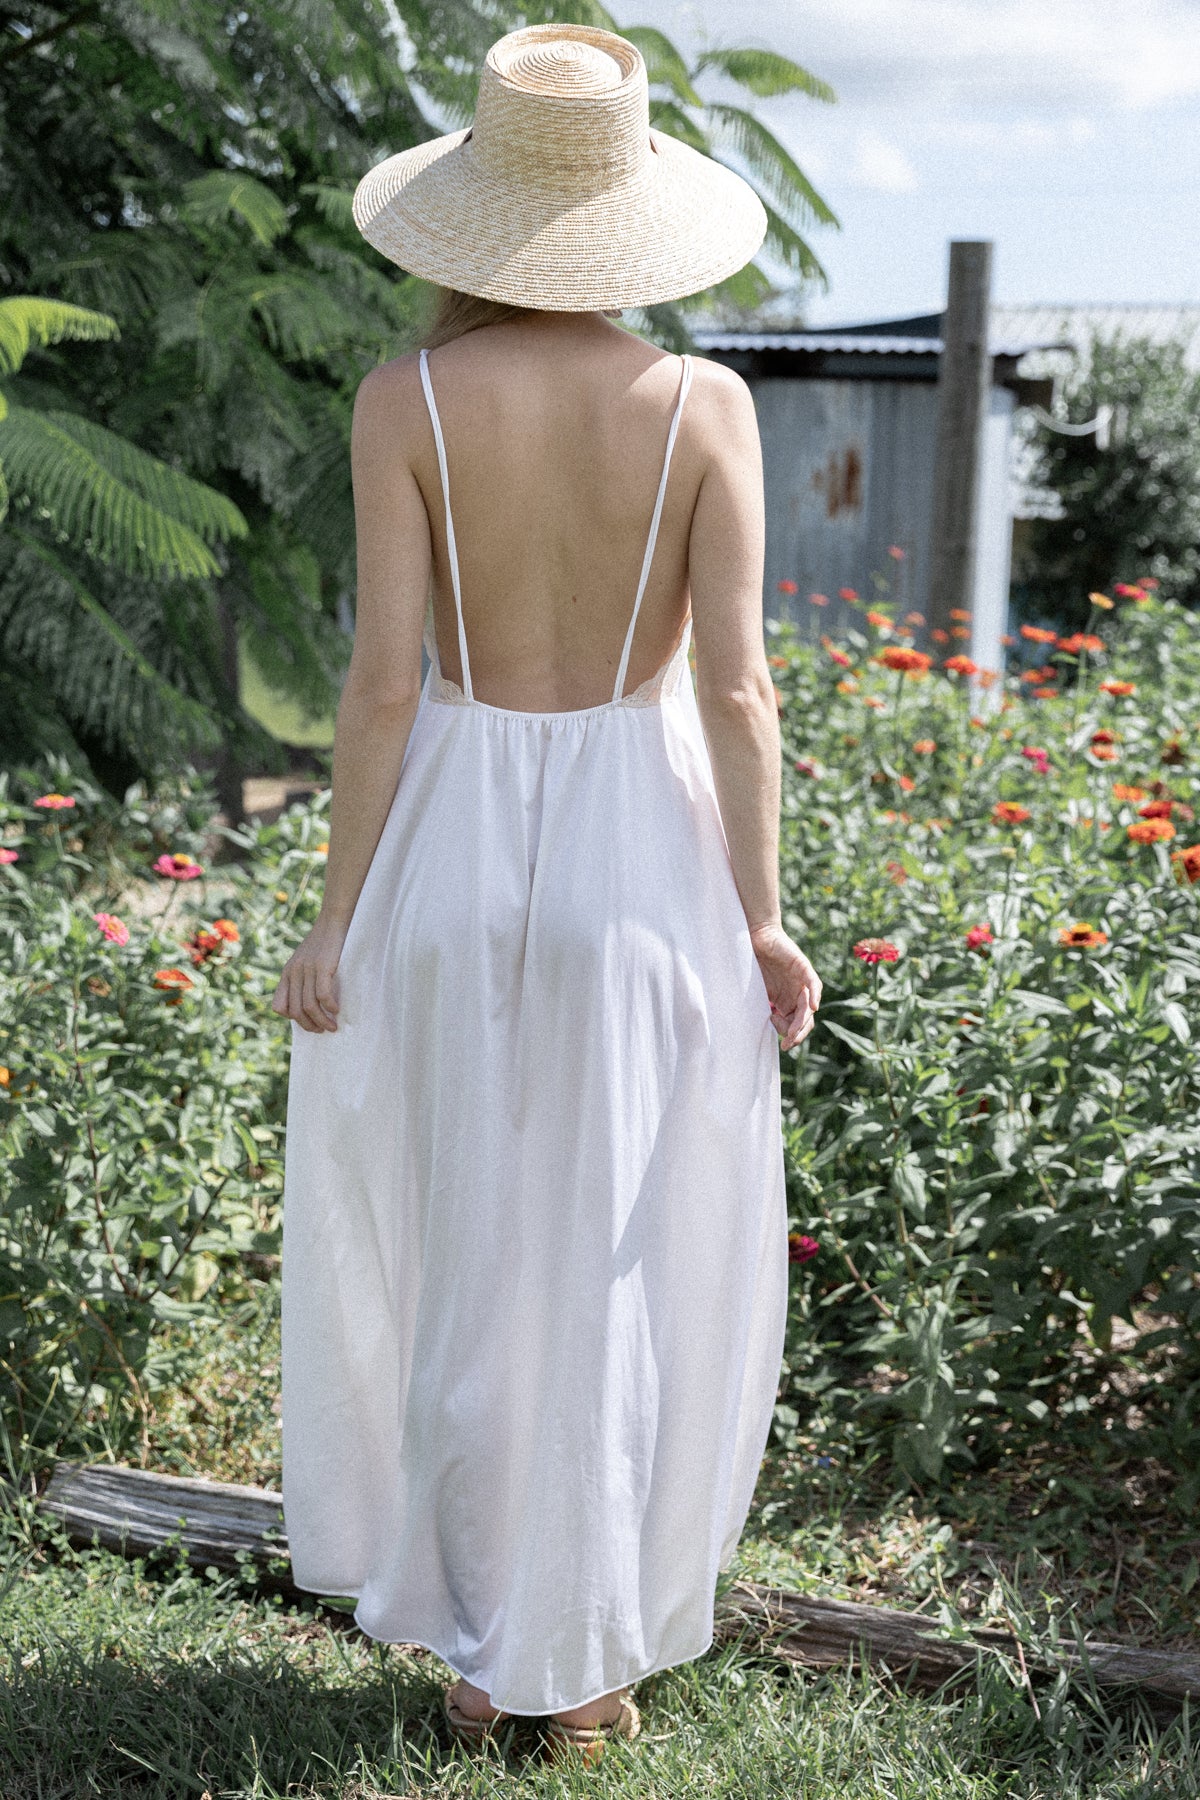 VINTAGE Lace Trimmed Cut Out Ivory Low Back Maxi Slip Dress S/M